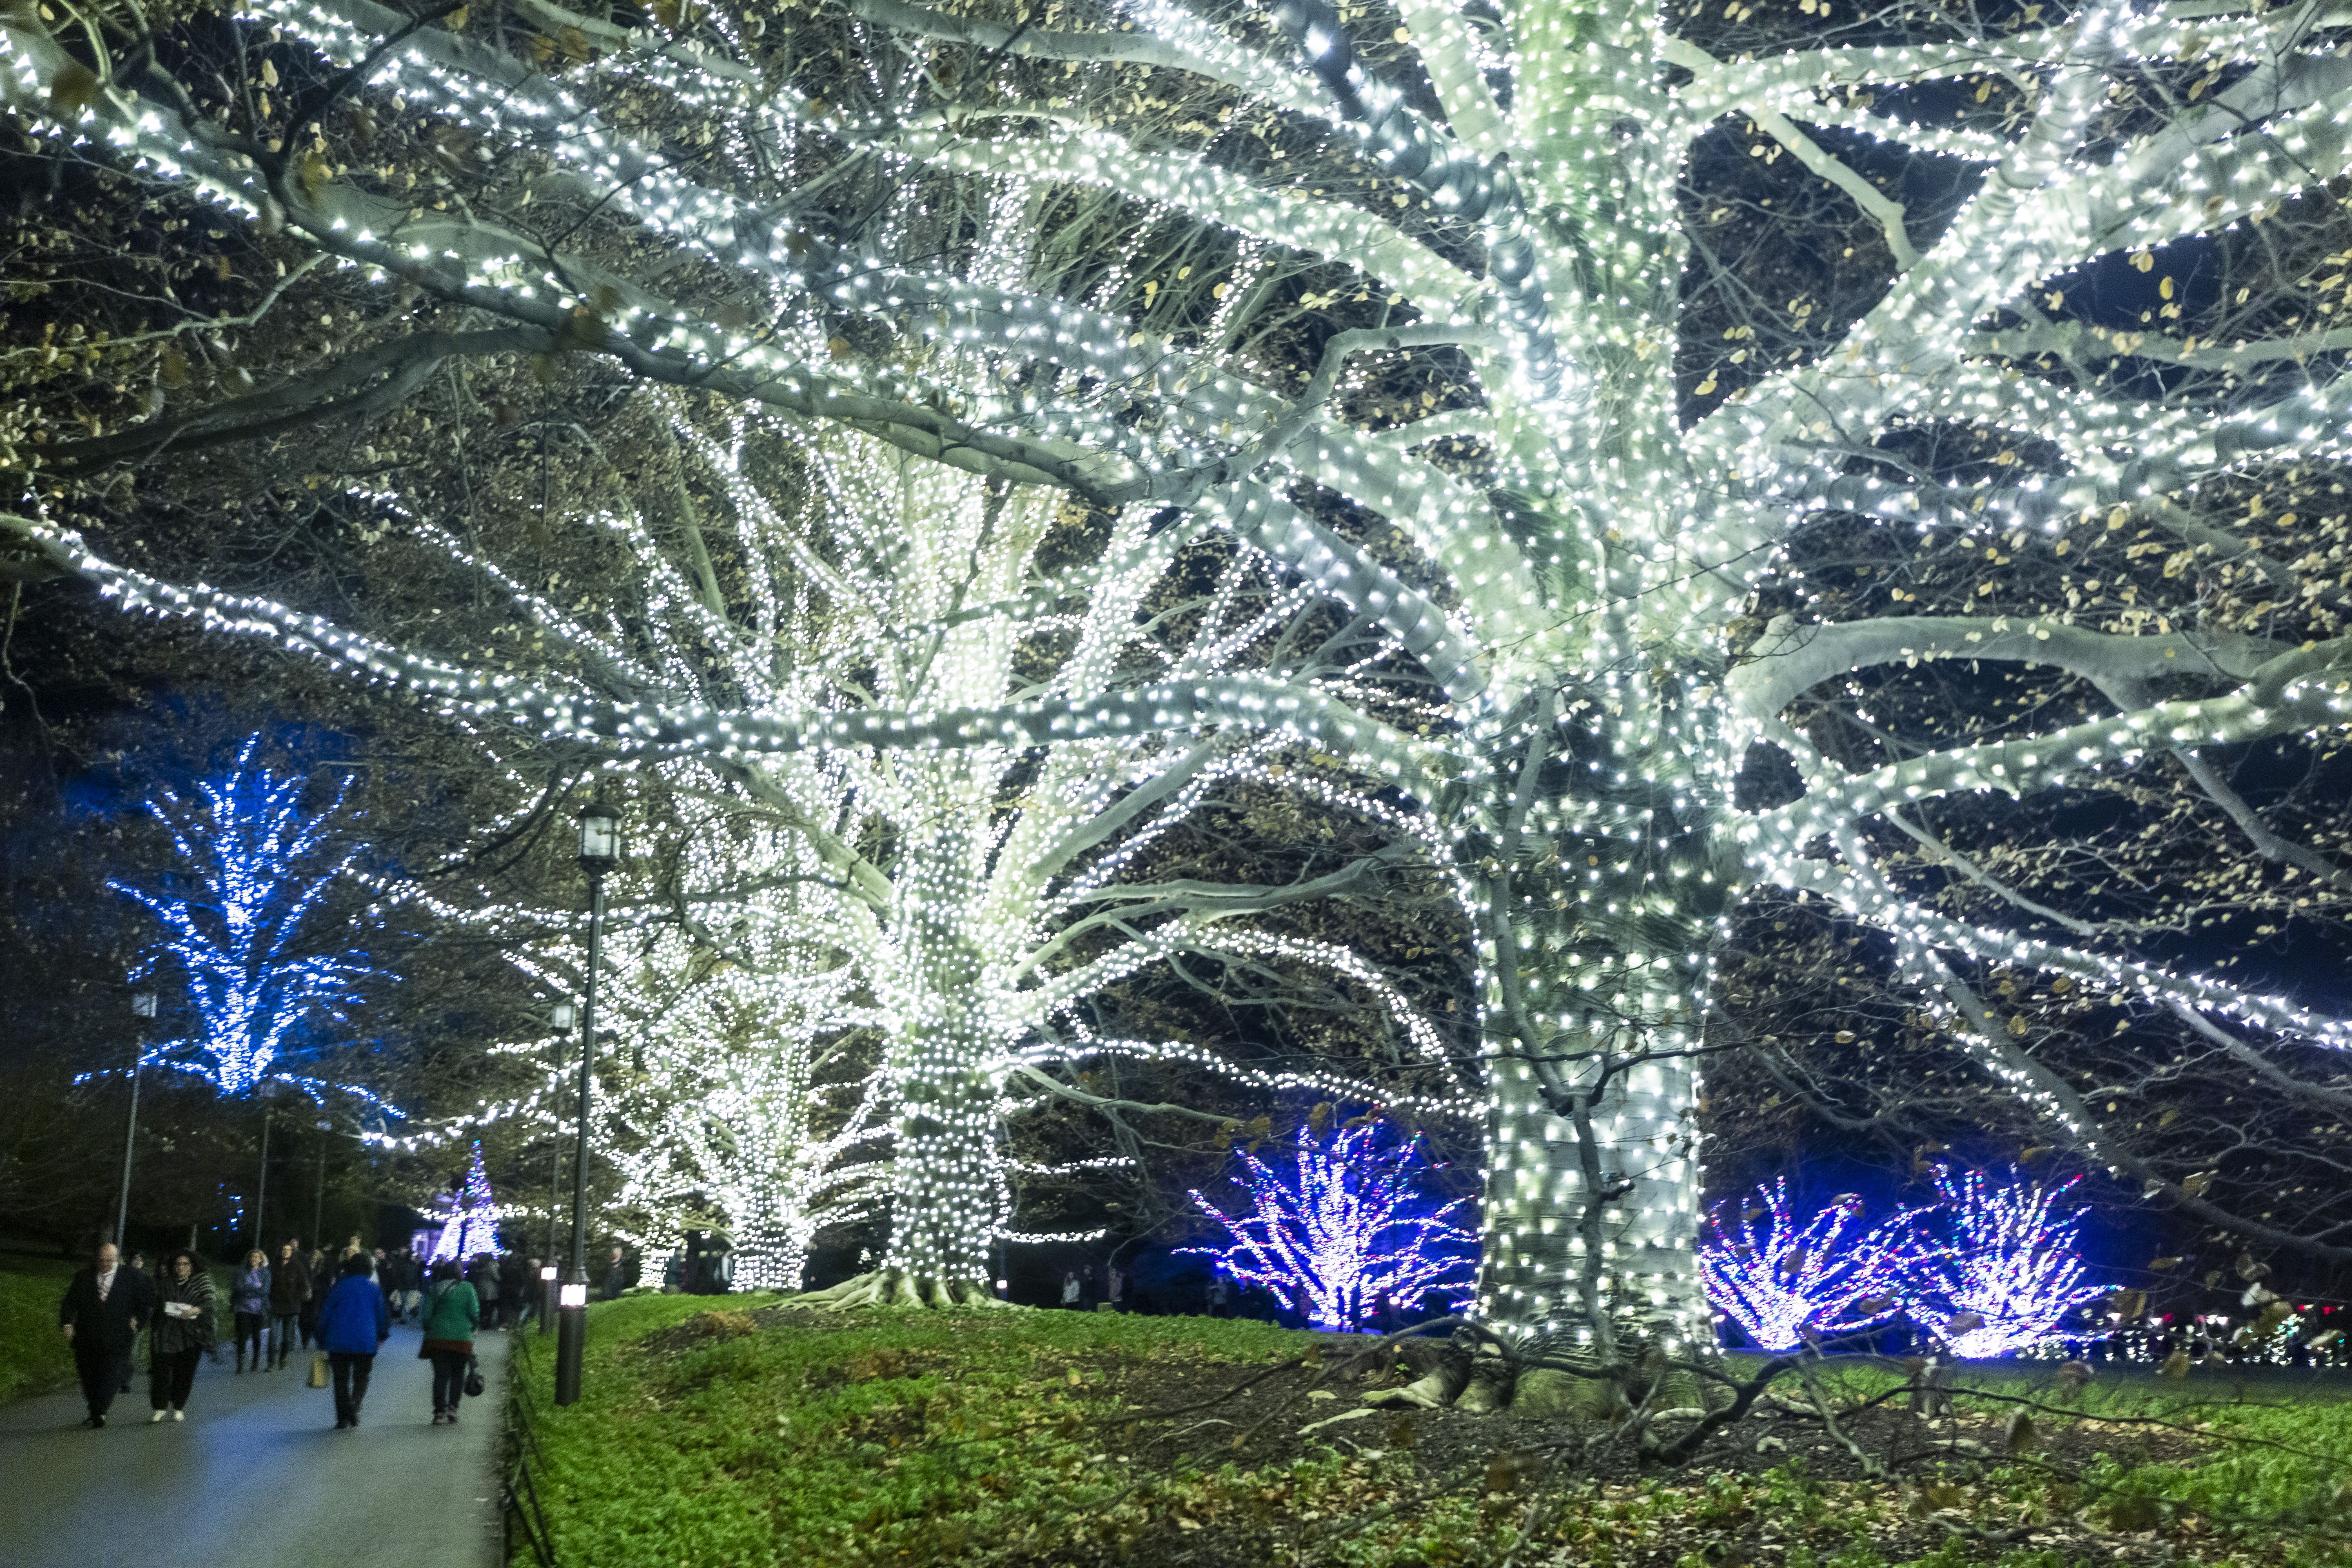 Longwood Gardens Christmas Display Includes 500 000 Lights 150